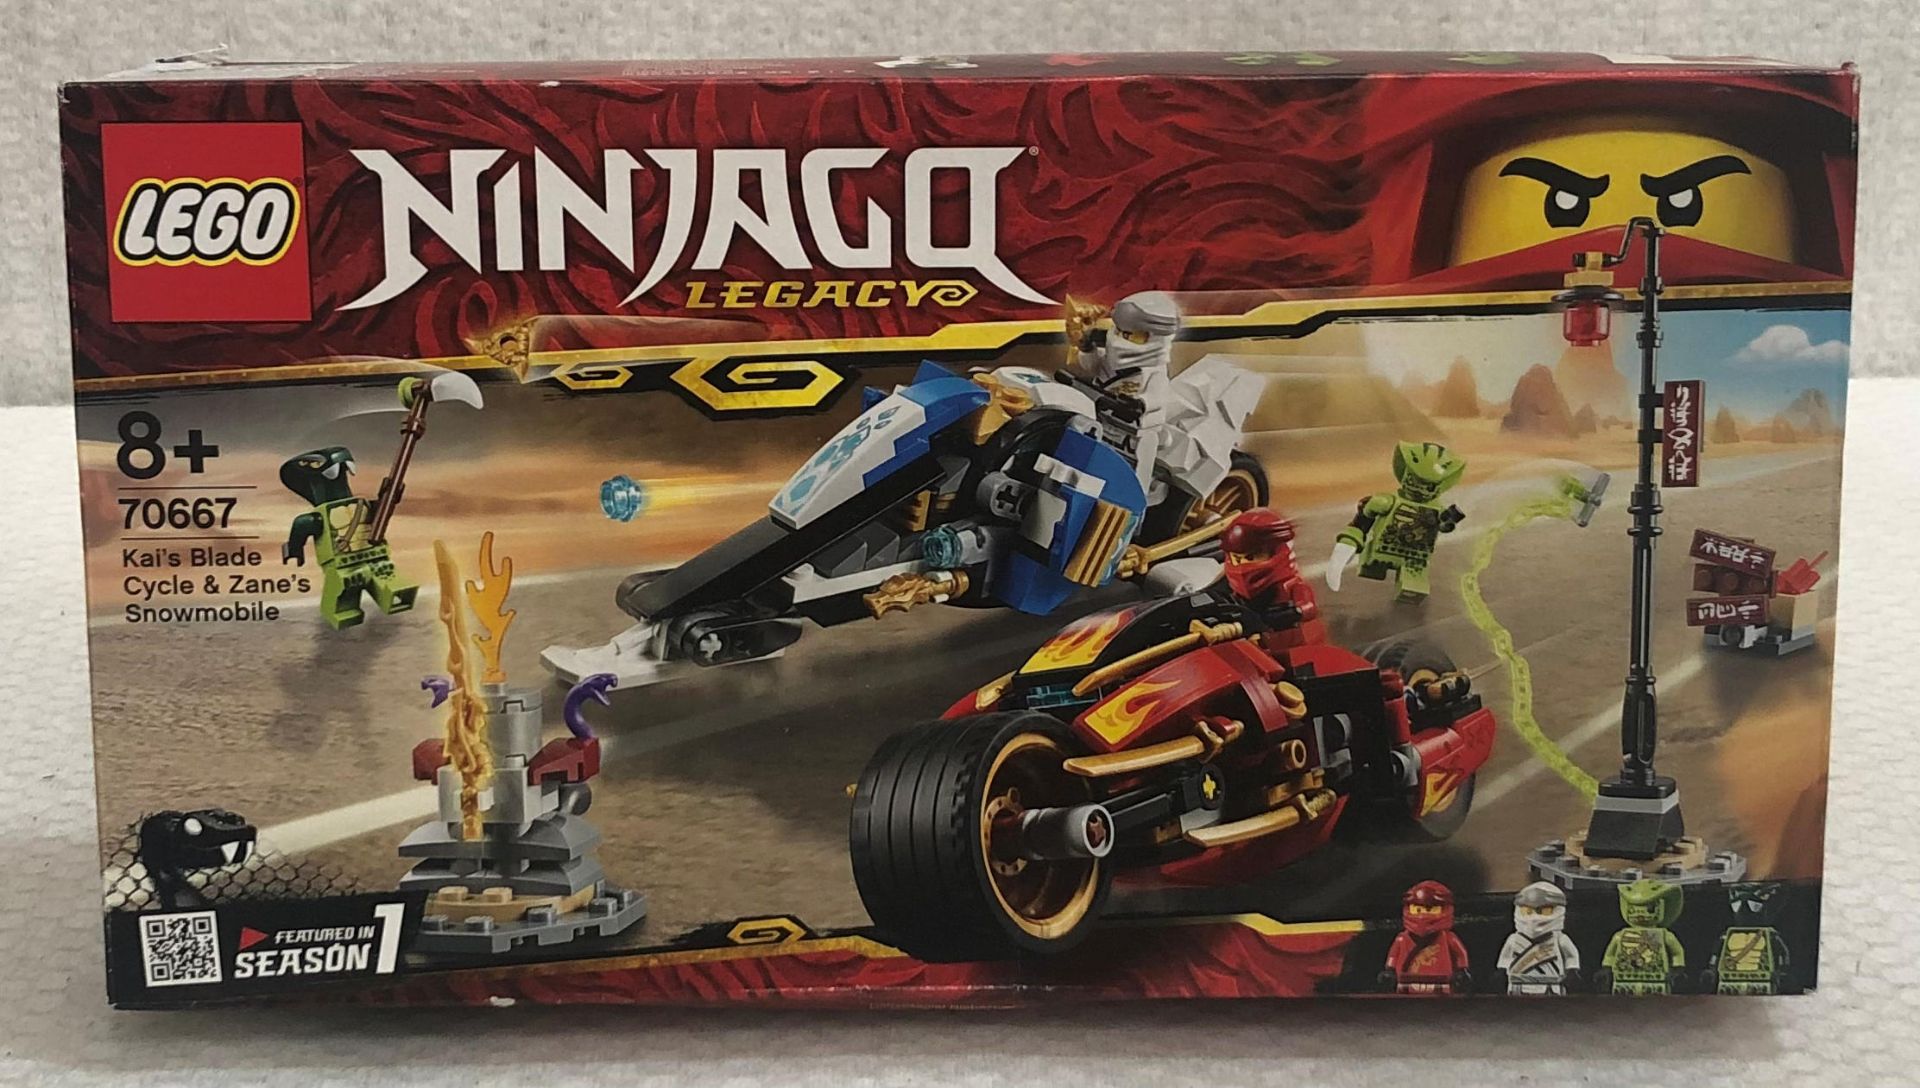 1 x Lego Ninjago Legacy Kai's Blade Cycle & Zane's Snowmobile - Model 70667 - New/Boxed - Image 2 of 5